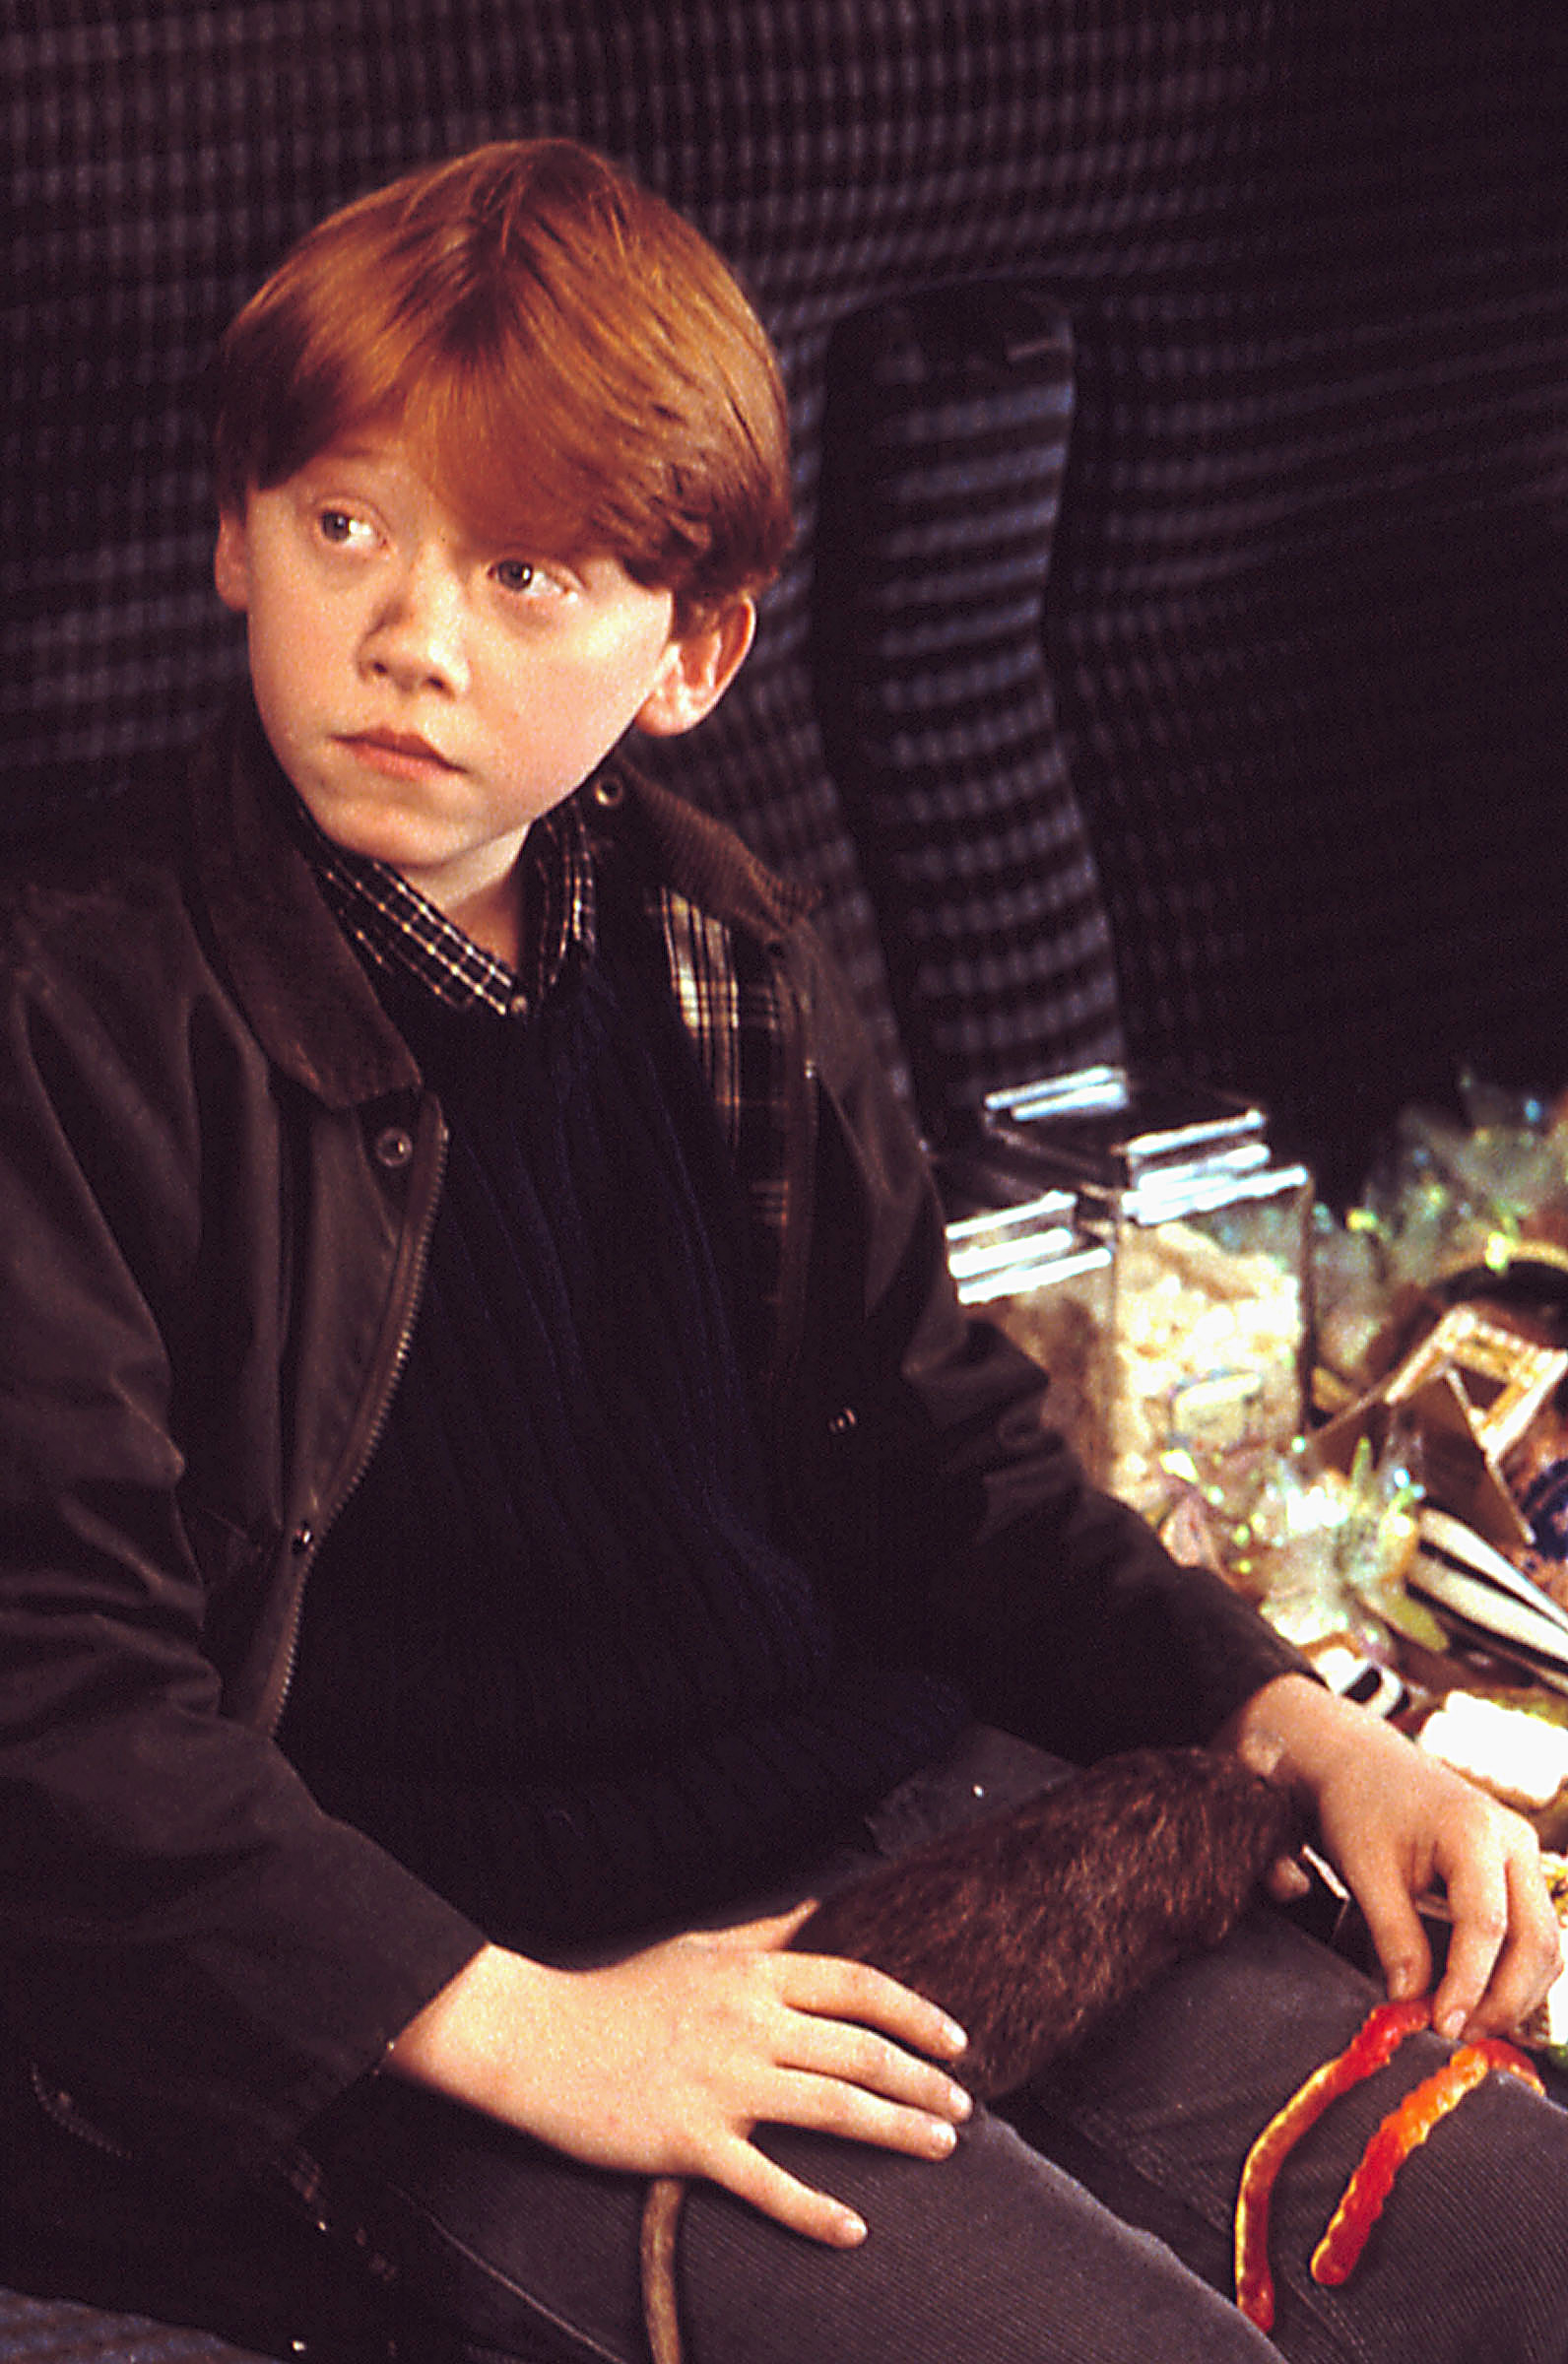 Rupert in &quot;Harry Potter.&quot;